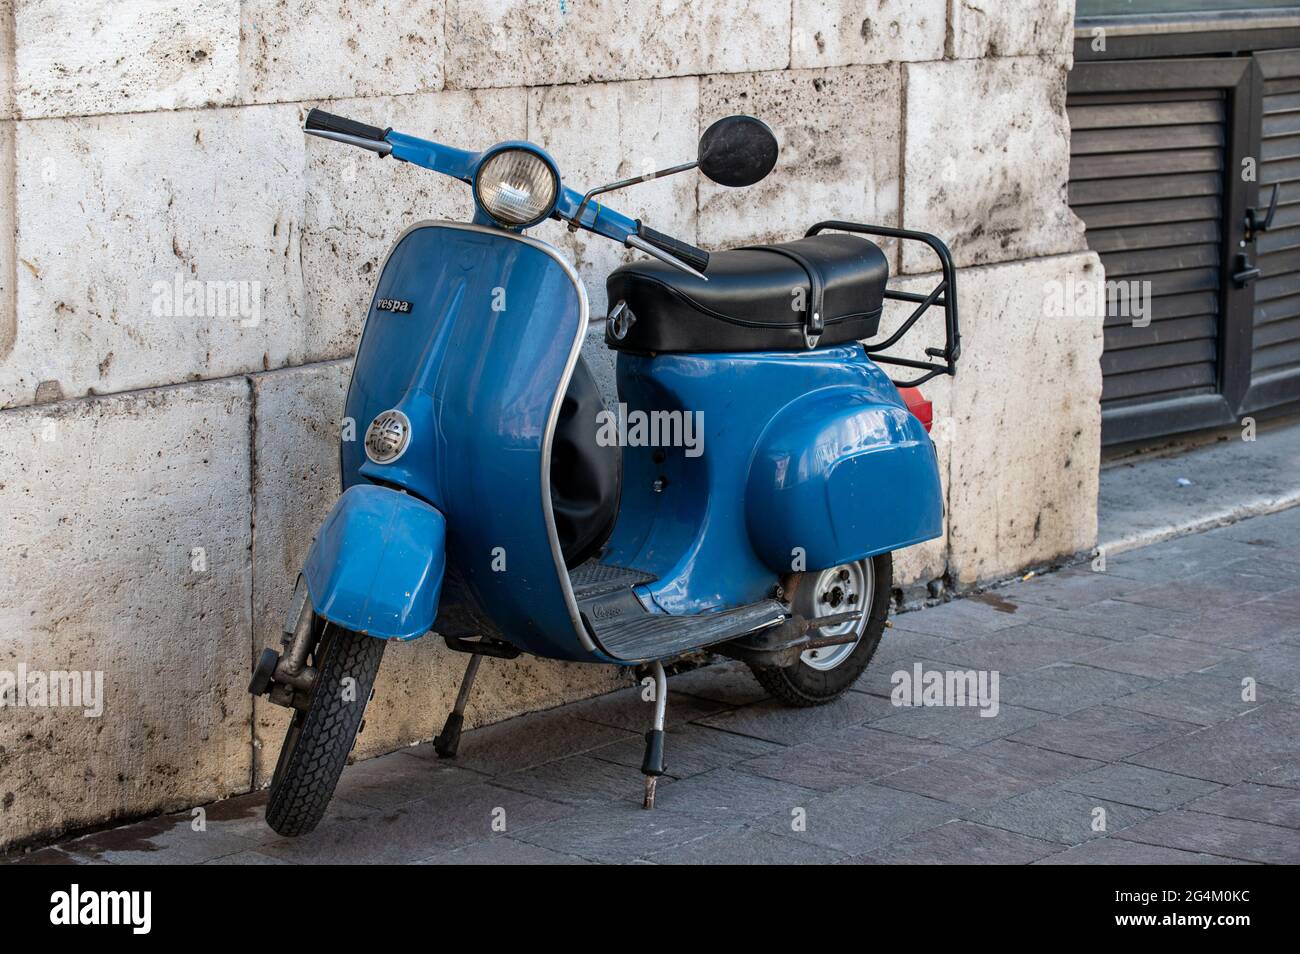 terni,italy june 22 2021:piaggio vespa 50 vintage in mixed blue color Stock Photo